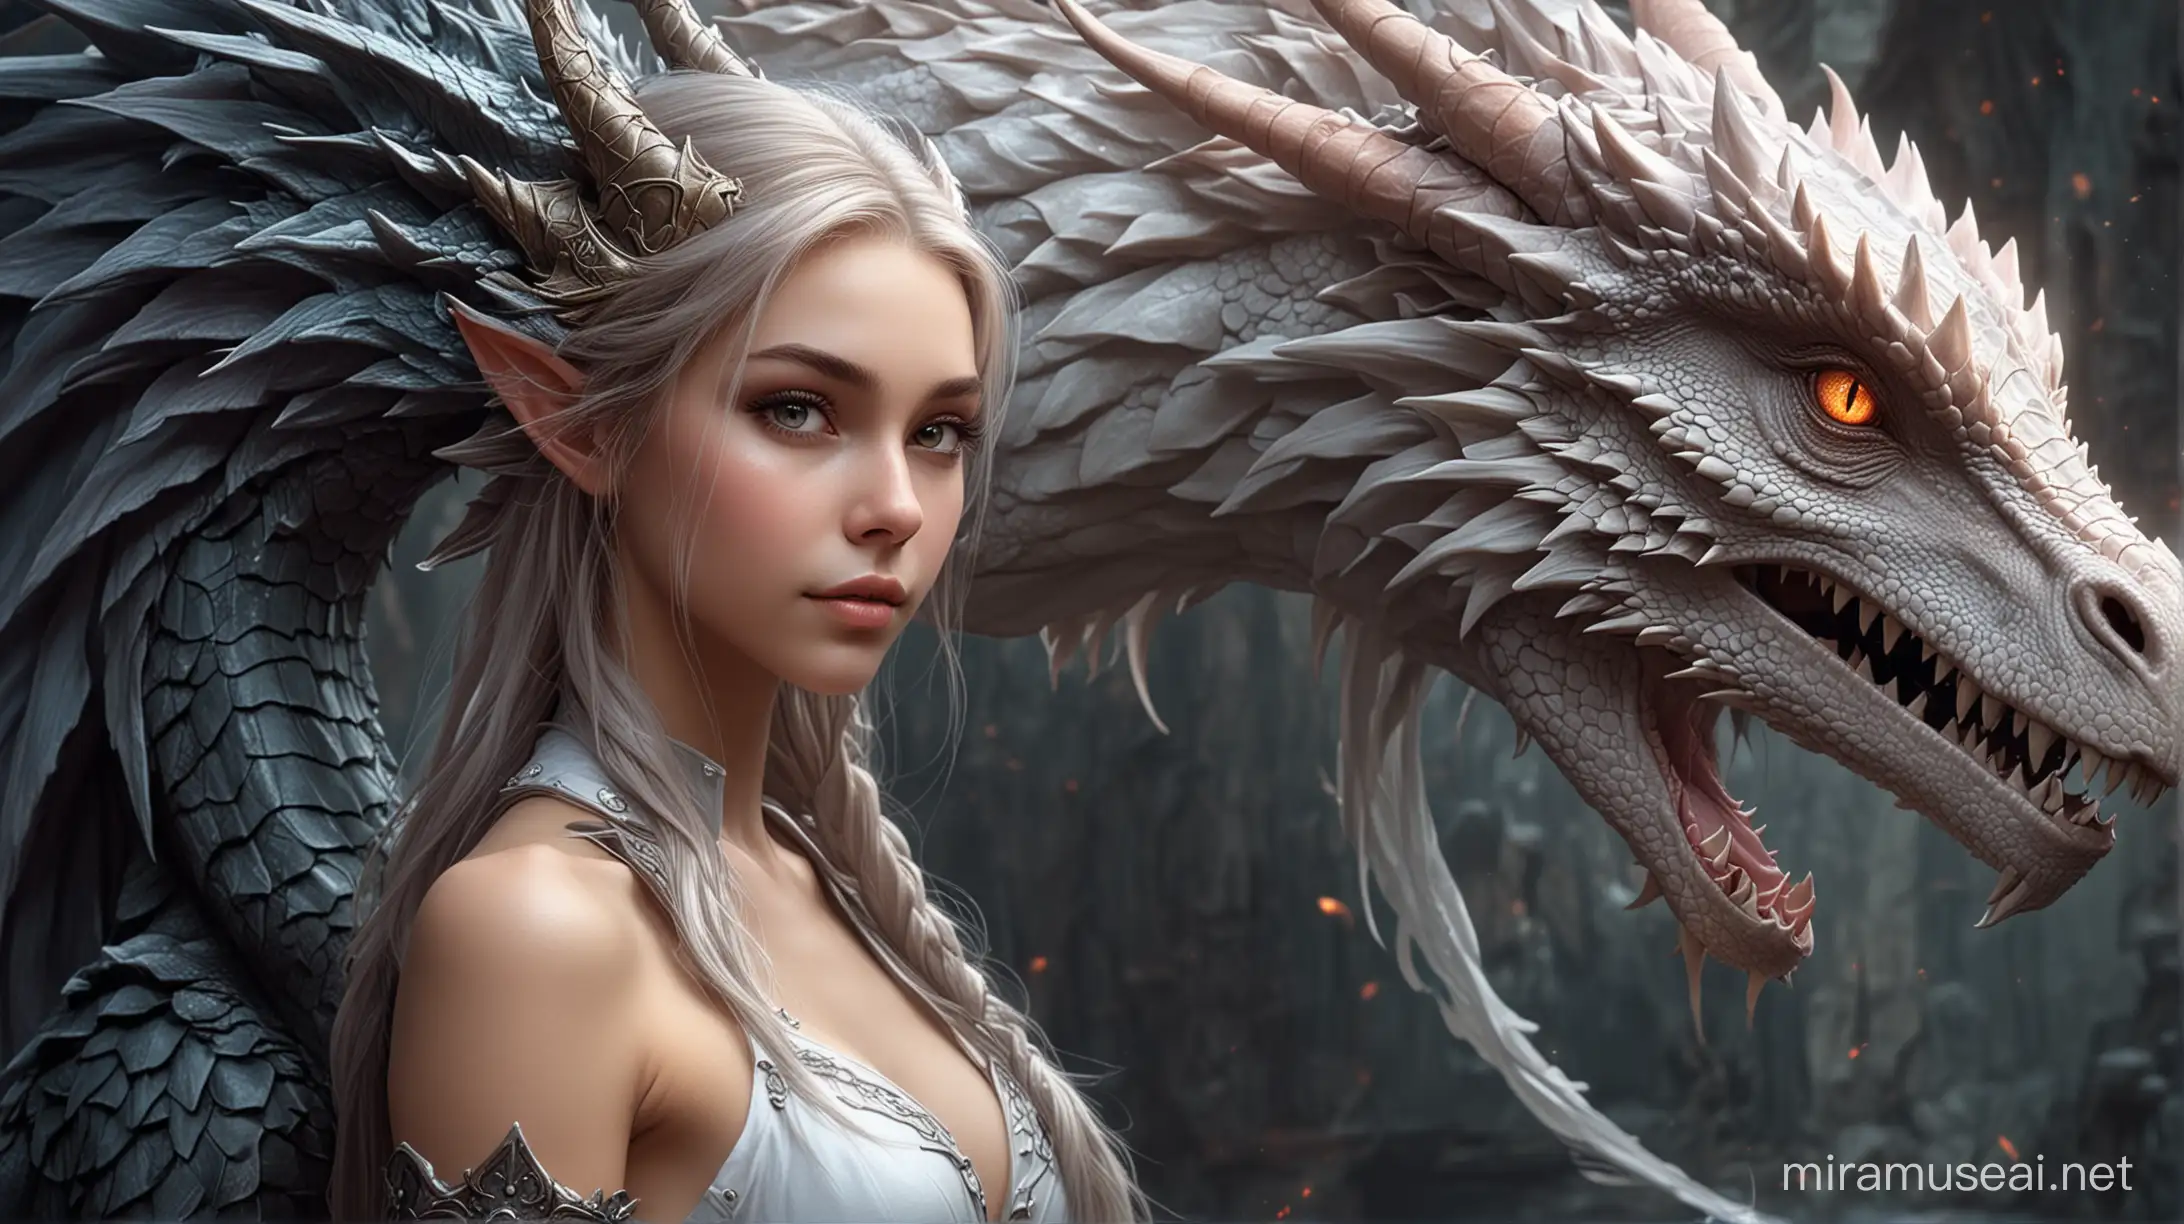 A pretty fantasy girl with a dragon.